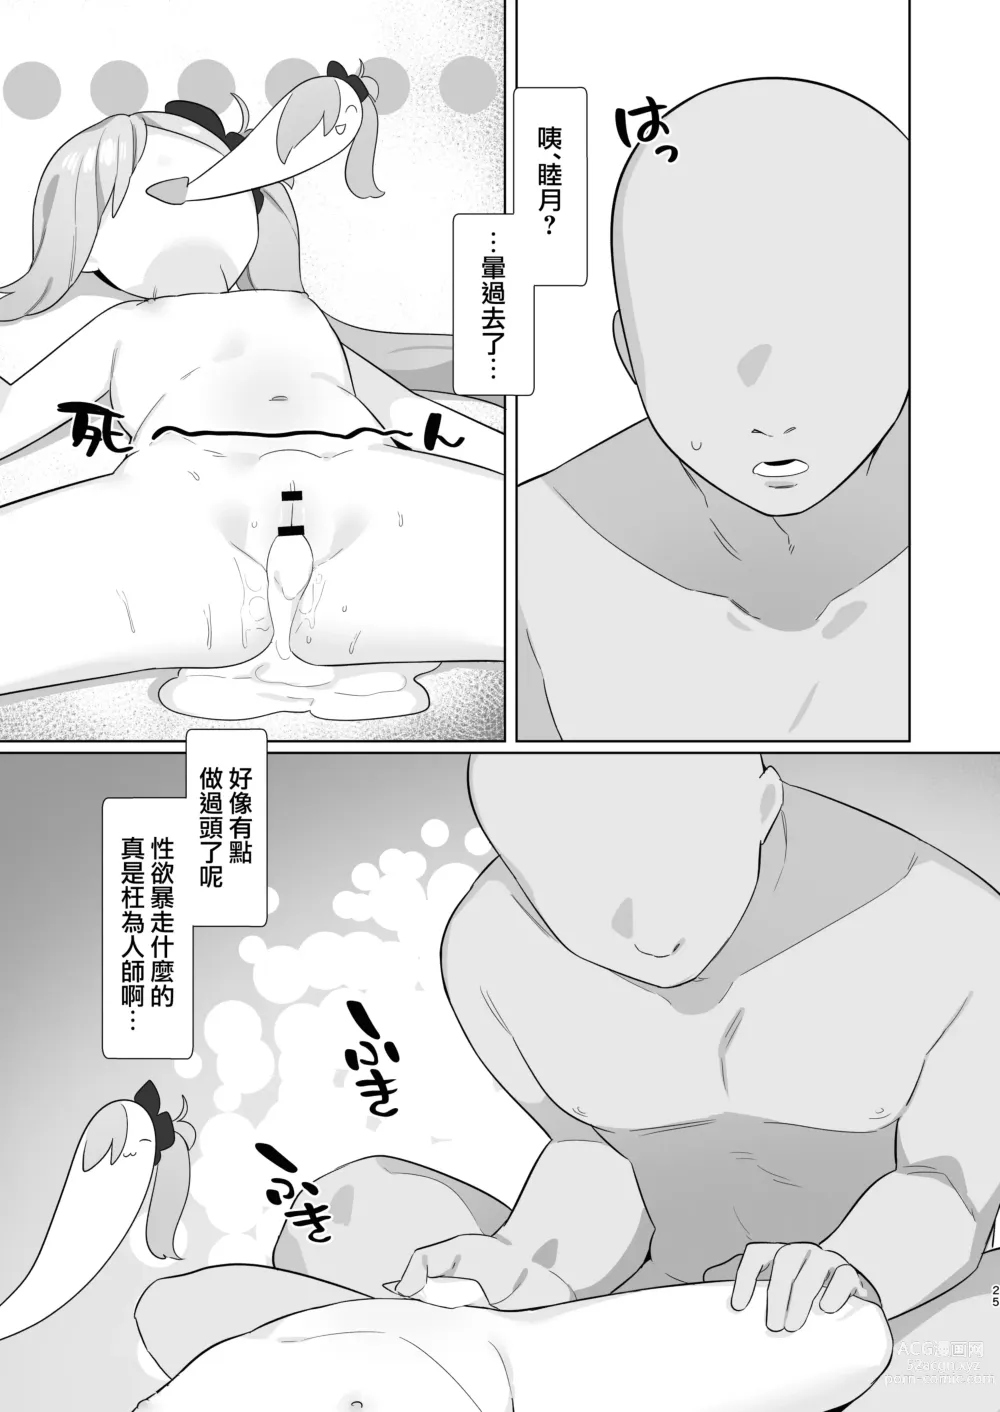 Page 24 of doujinshi 碧蓝档案催眠部3 ~浅黄睦月篇~